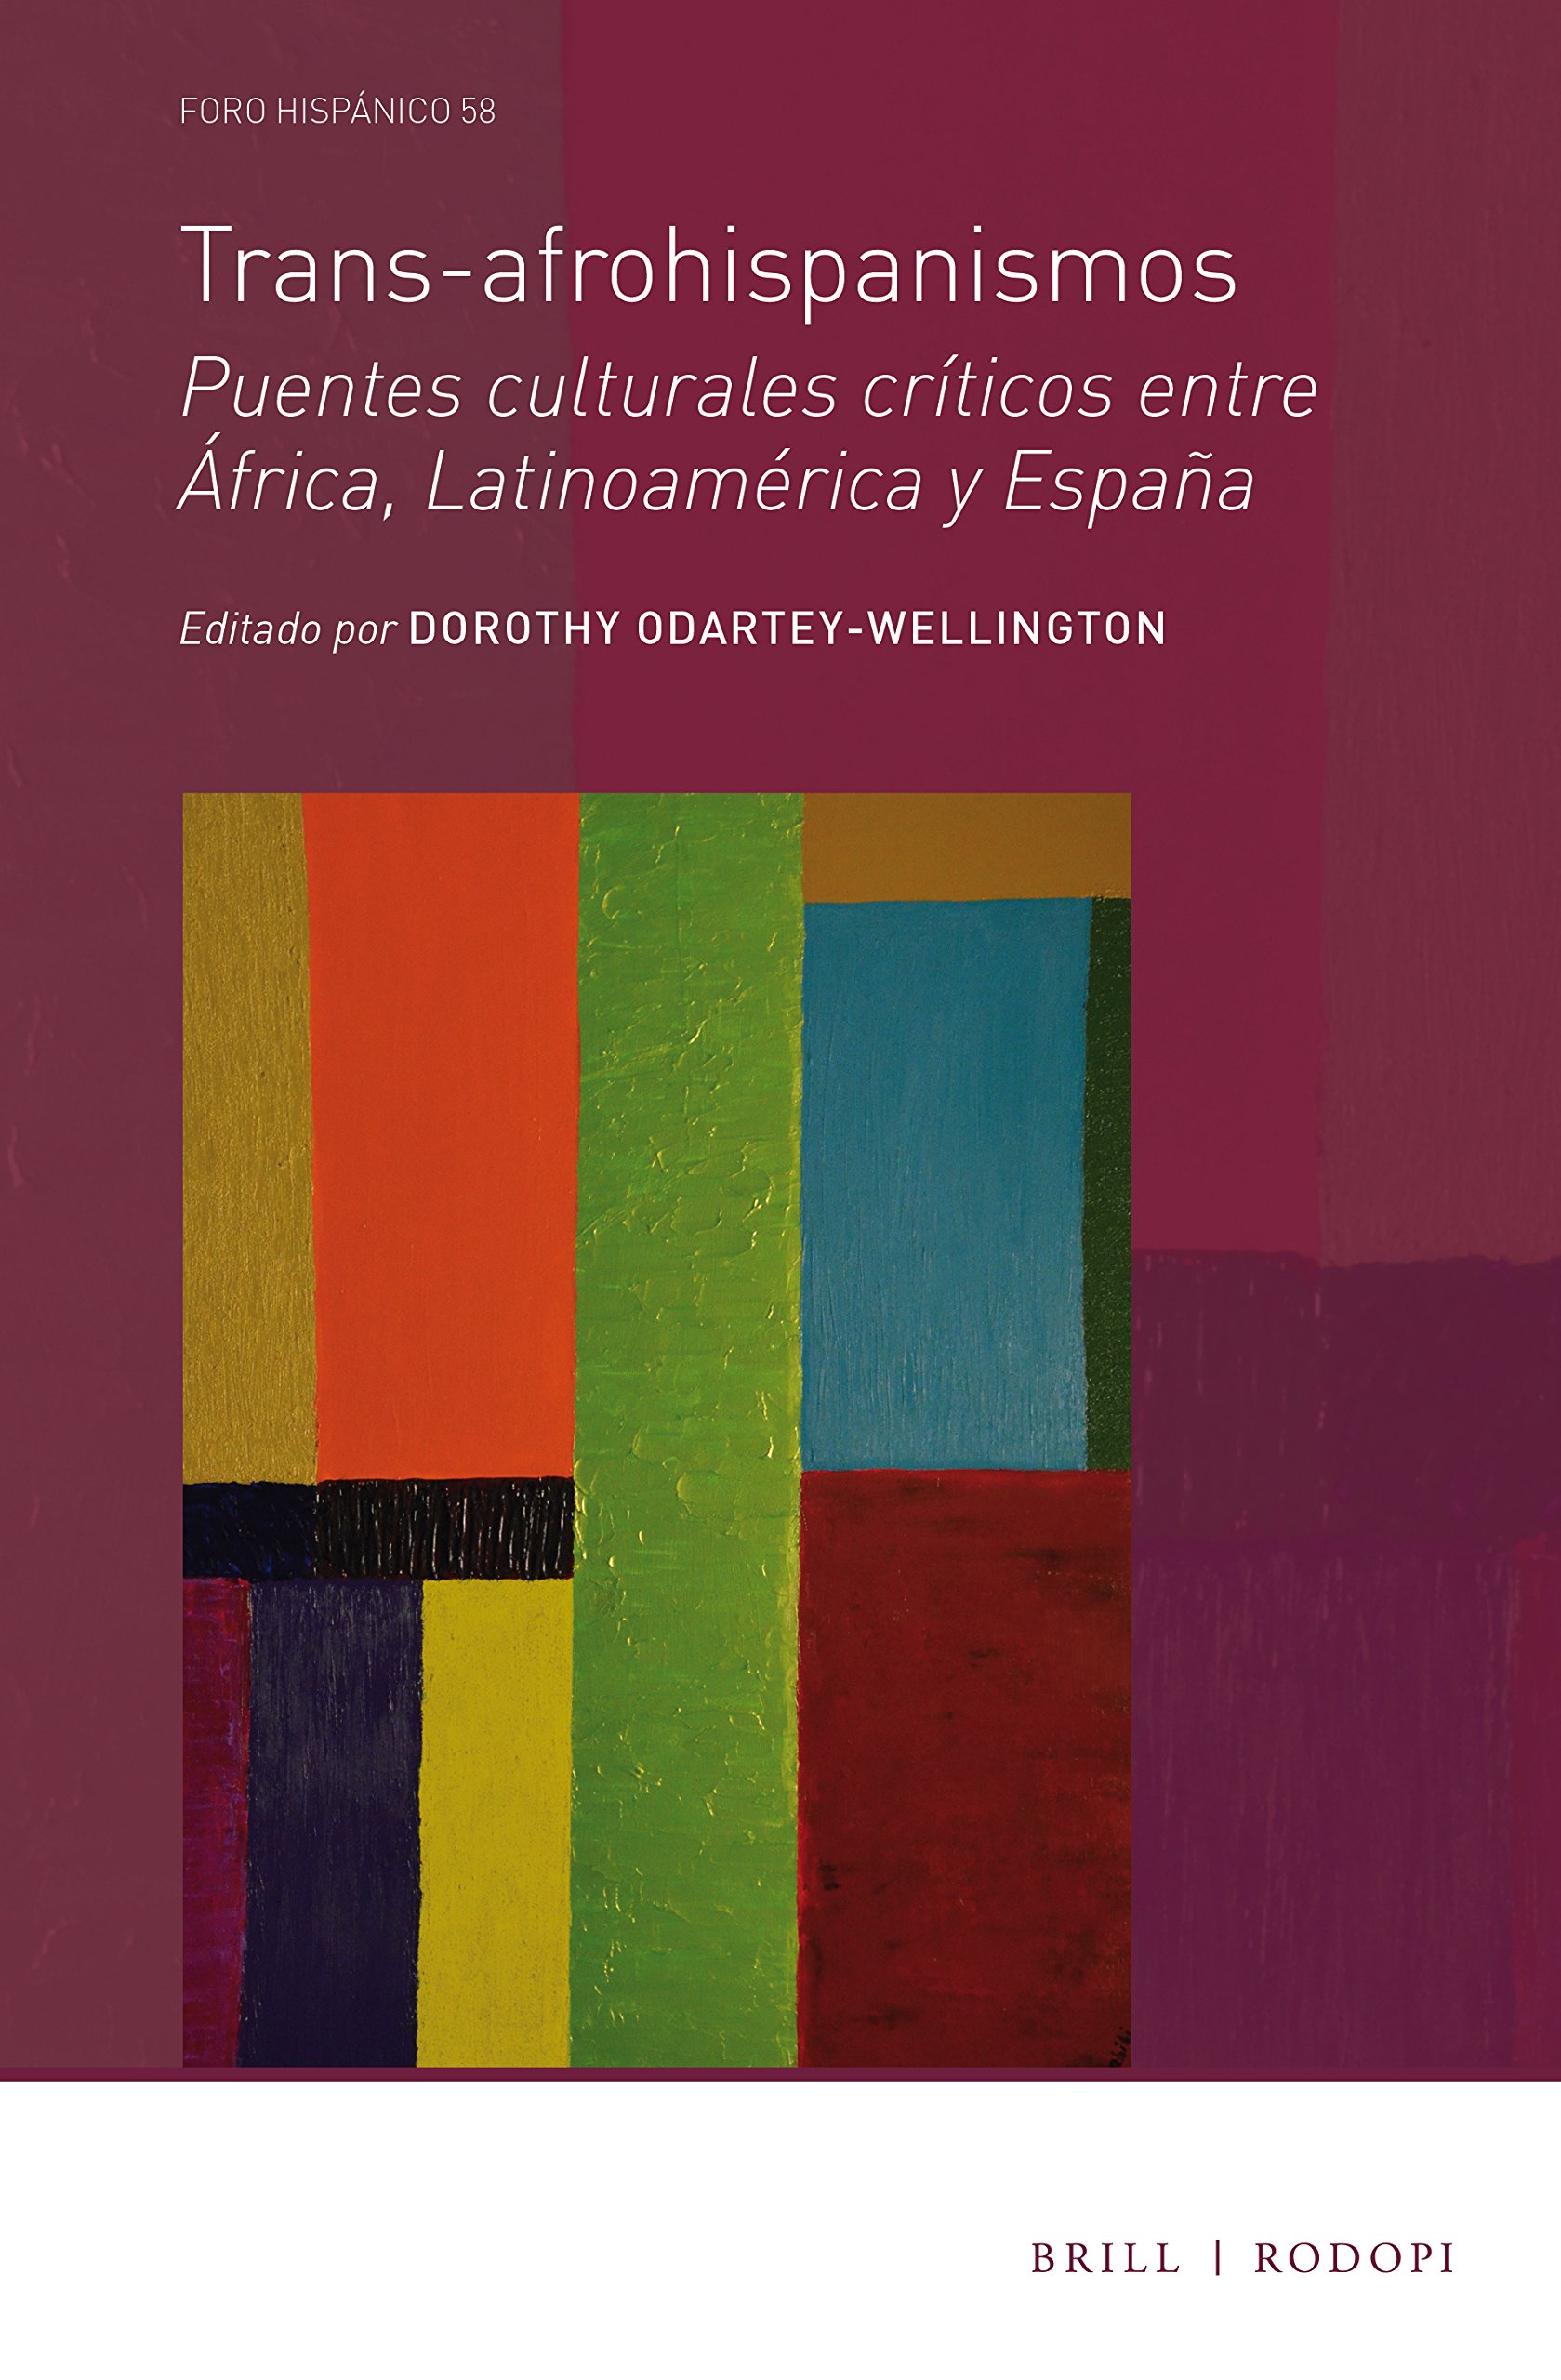 Imagen de portada del libro Trans-afrohispanismos